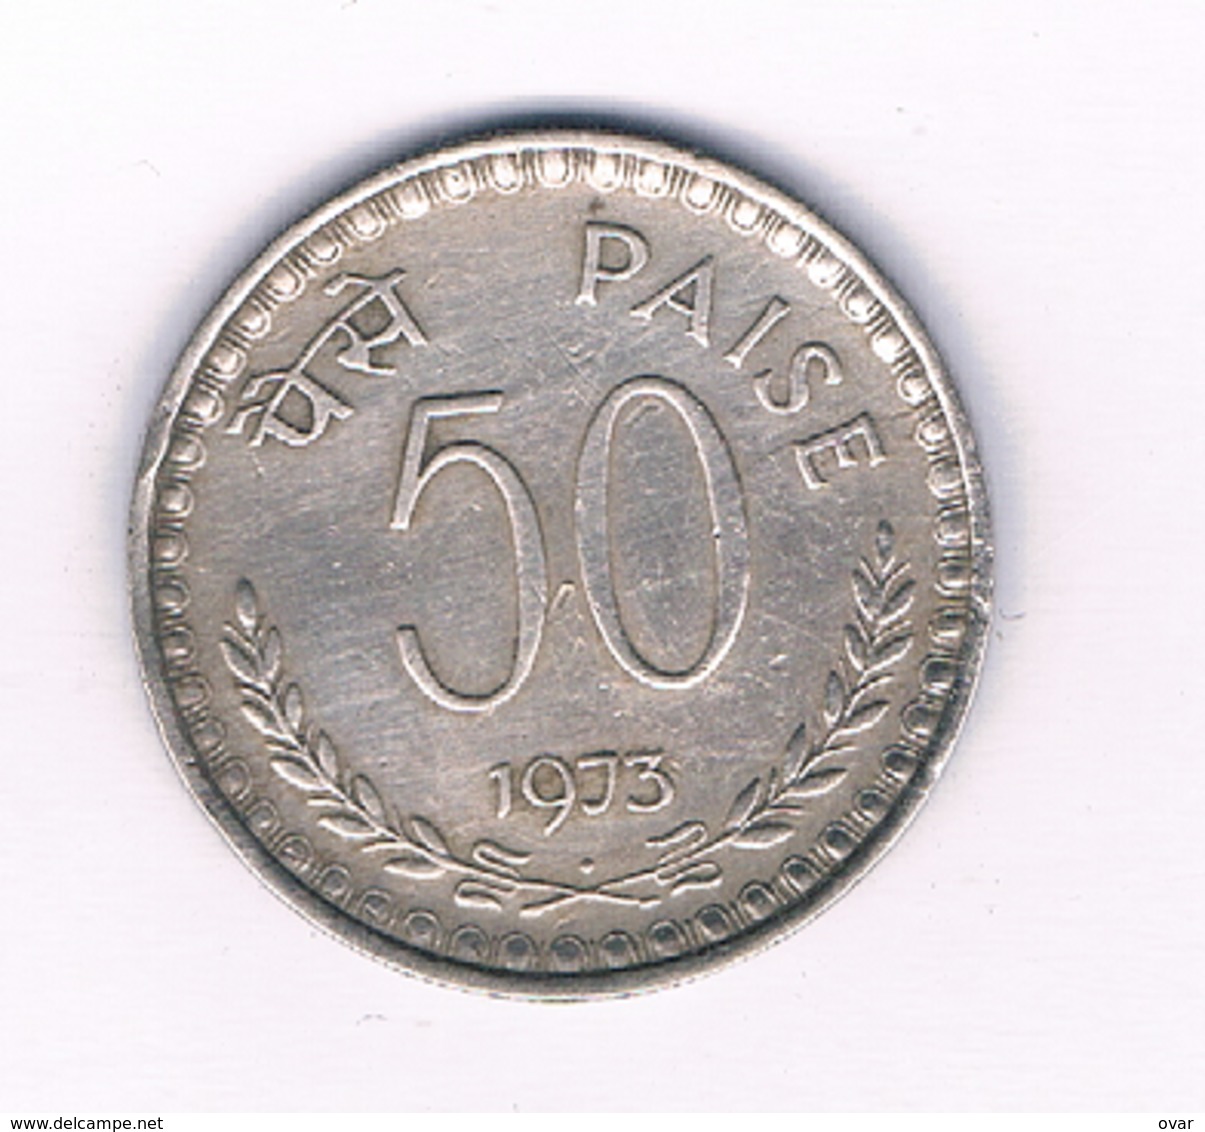 50 PAISE 1973 INDIA /3955/ - India